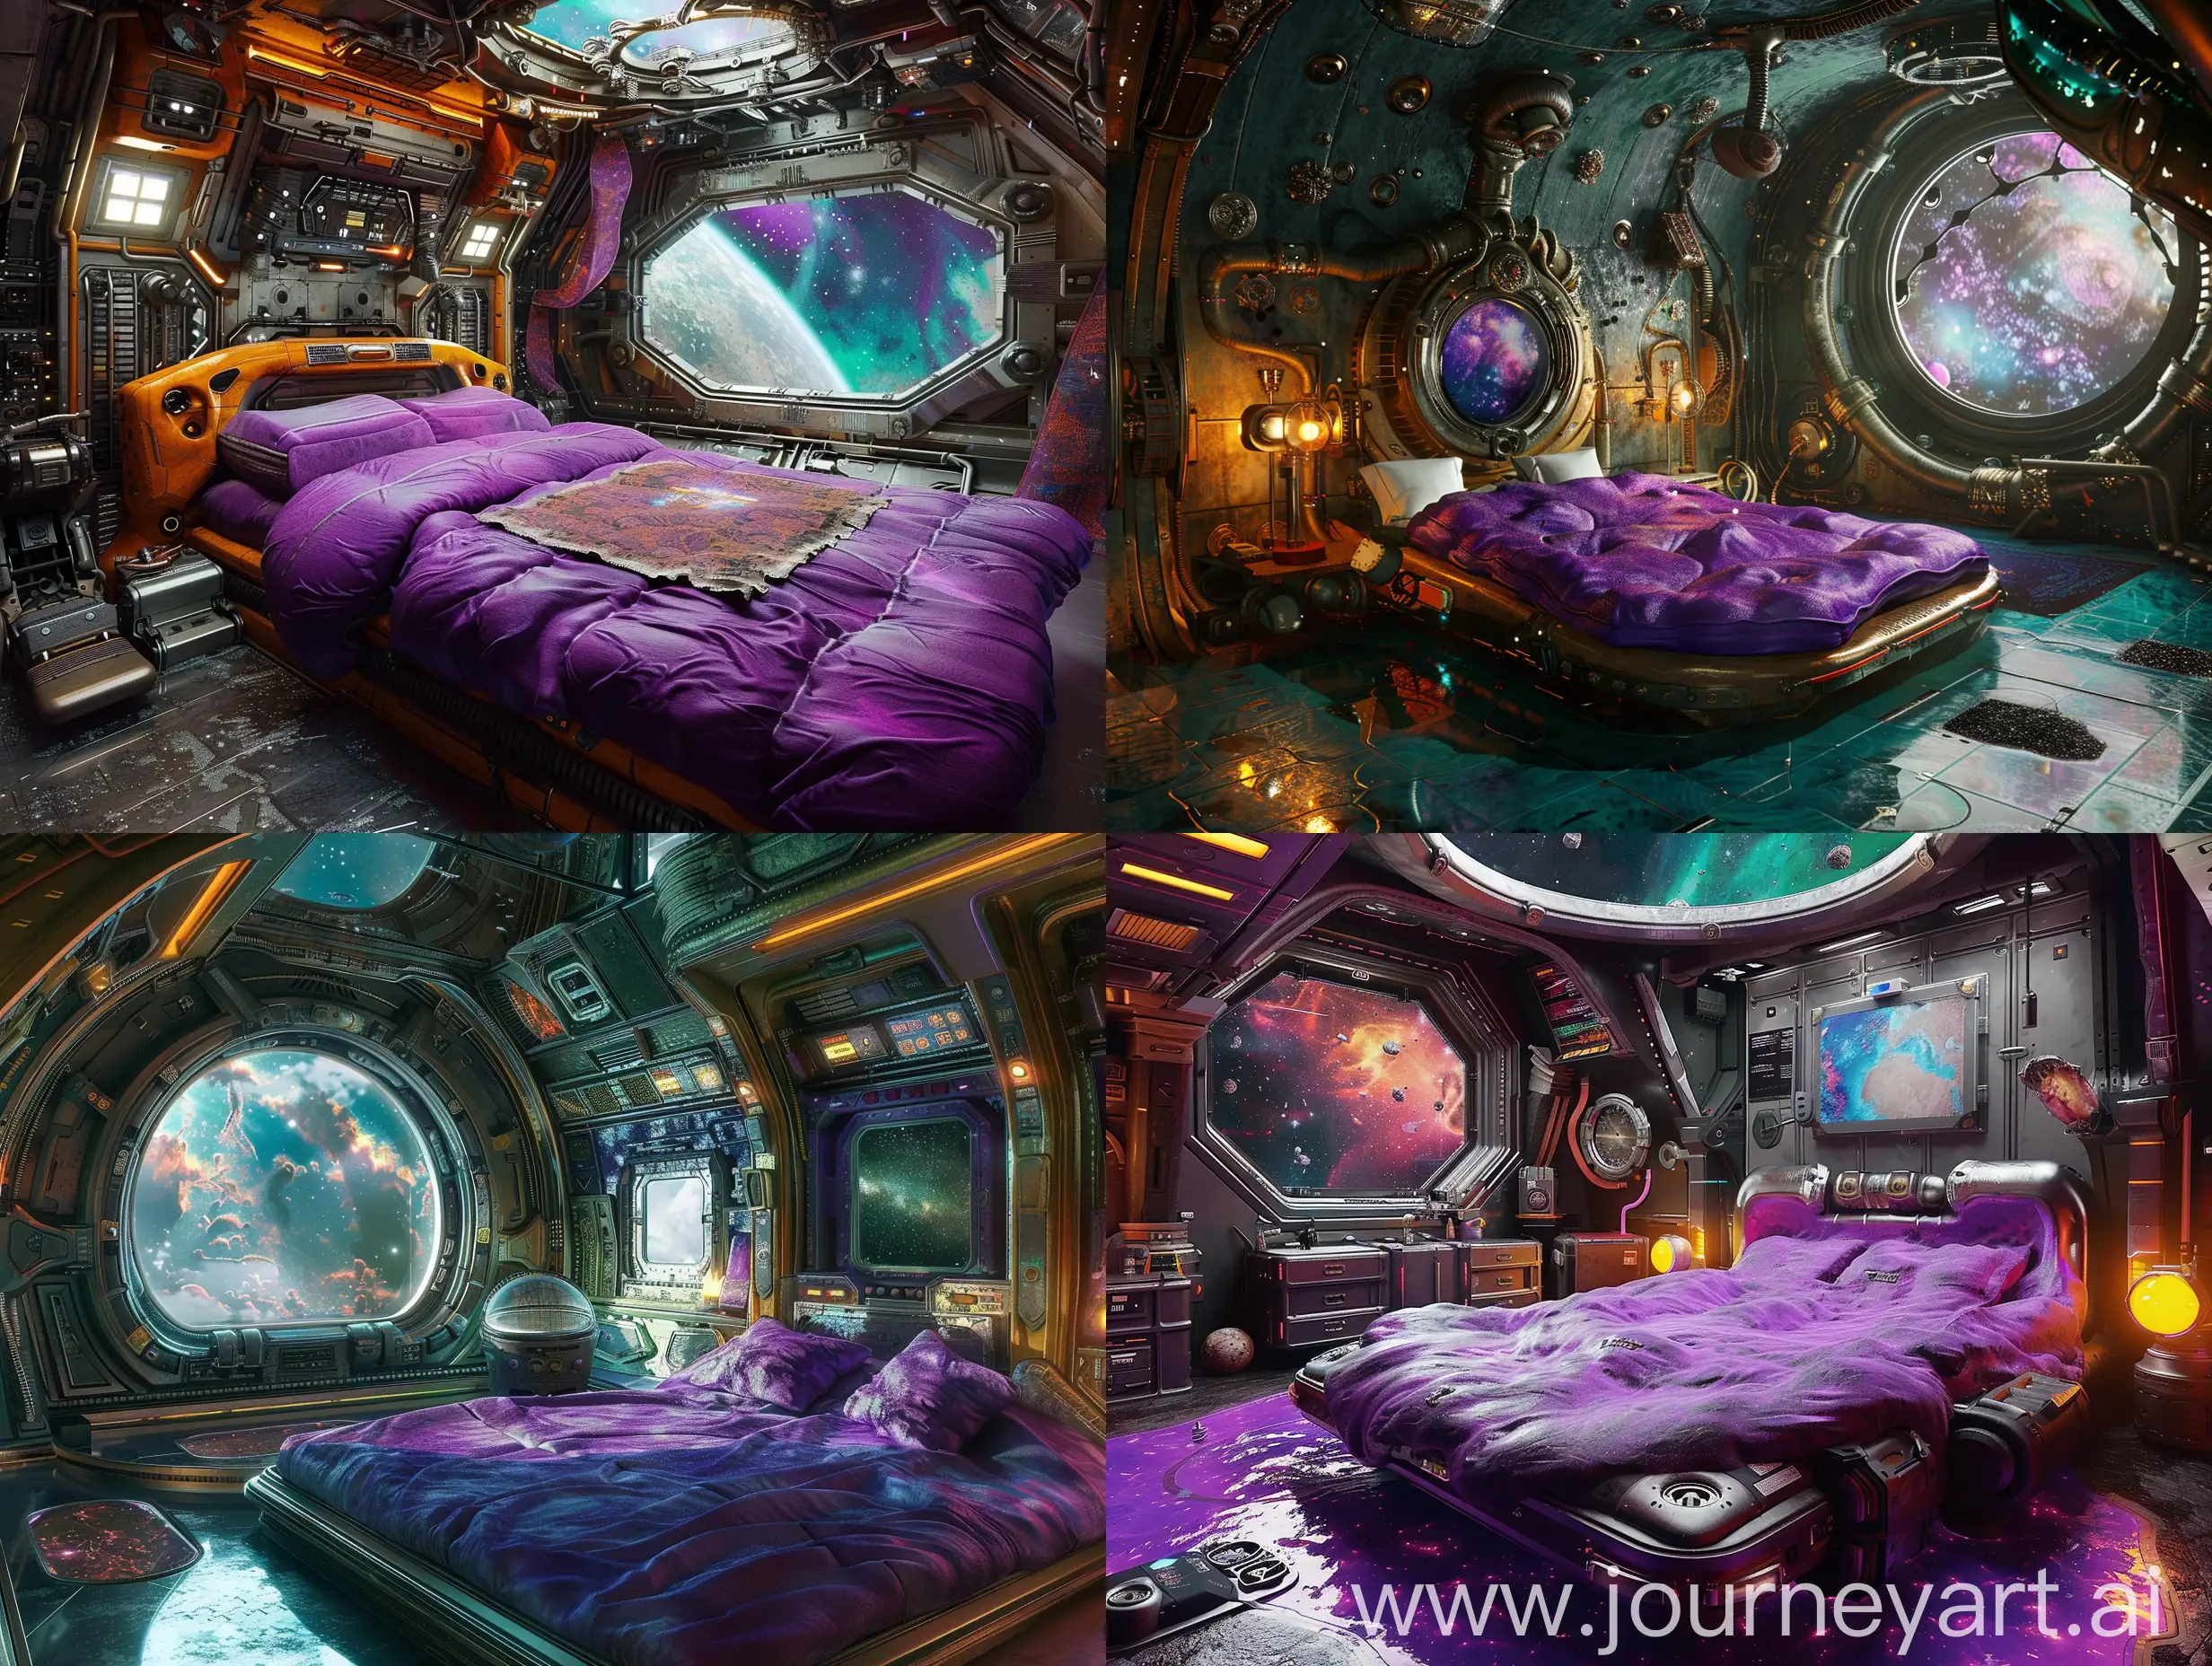 Bedroom in space, [[weird purple waterbed bouncy alien]], hyperdetailed nebula, spaceship bedroom steampunk, By Steven Belledin, Alex Hirsch, Russ Mills, and Alexander Jansson, SUPER_COLORFUL hyperdetailed_intricate_cinematic_breathtaking_complimentary_deep_colors